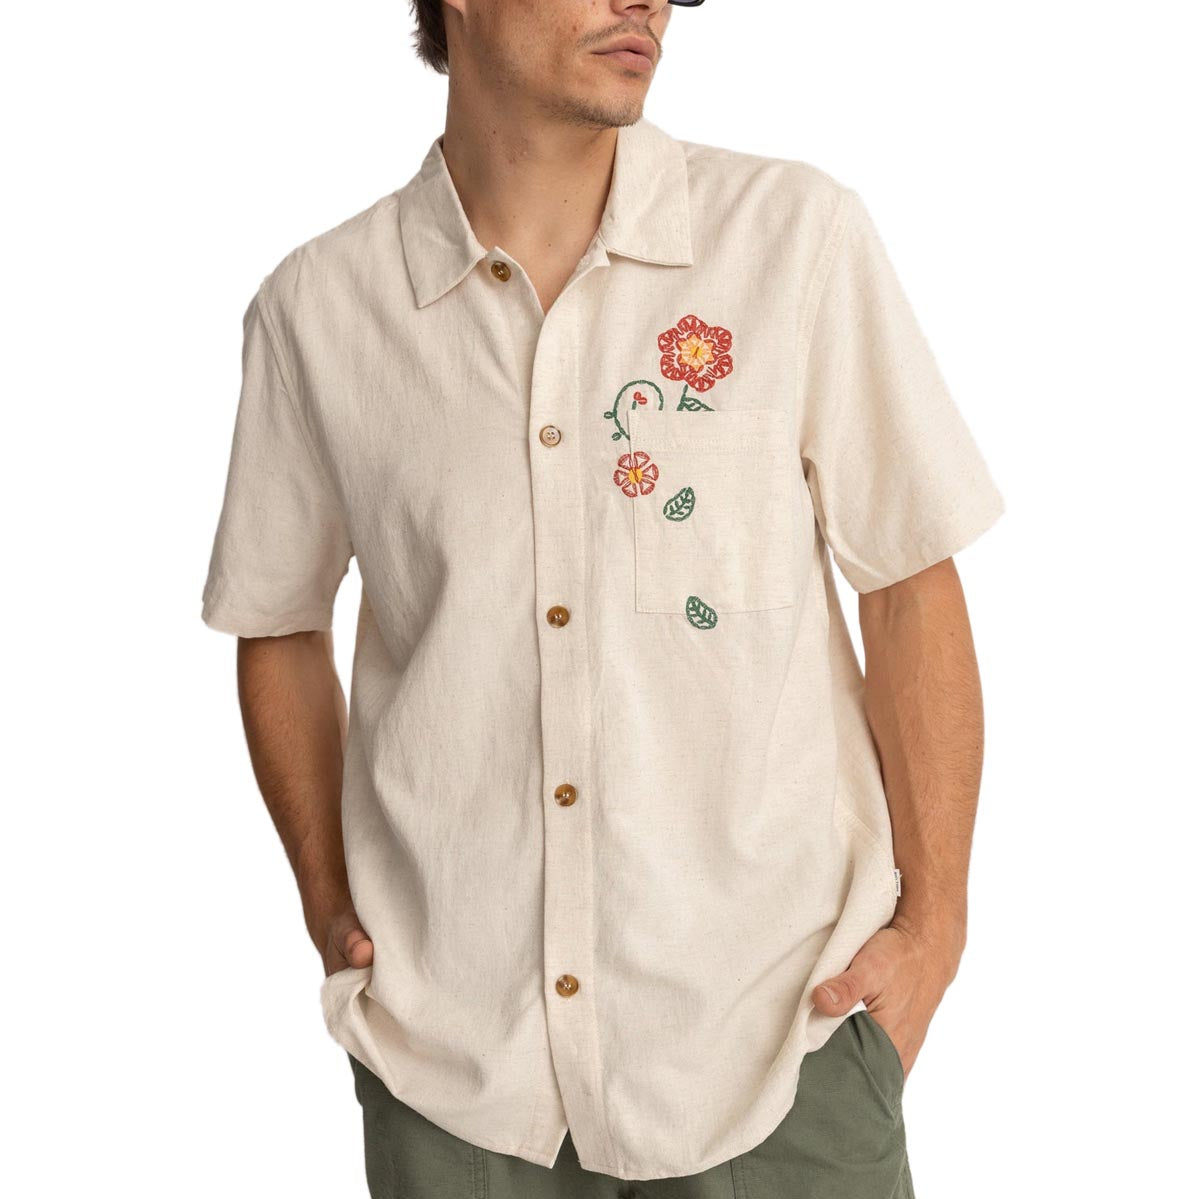 Rhythm Flower Embroidery Shirt - Natural image 1